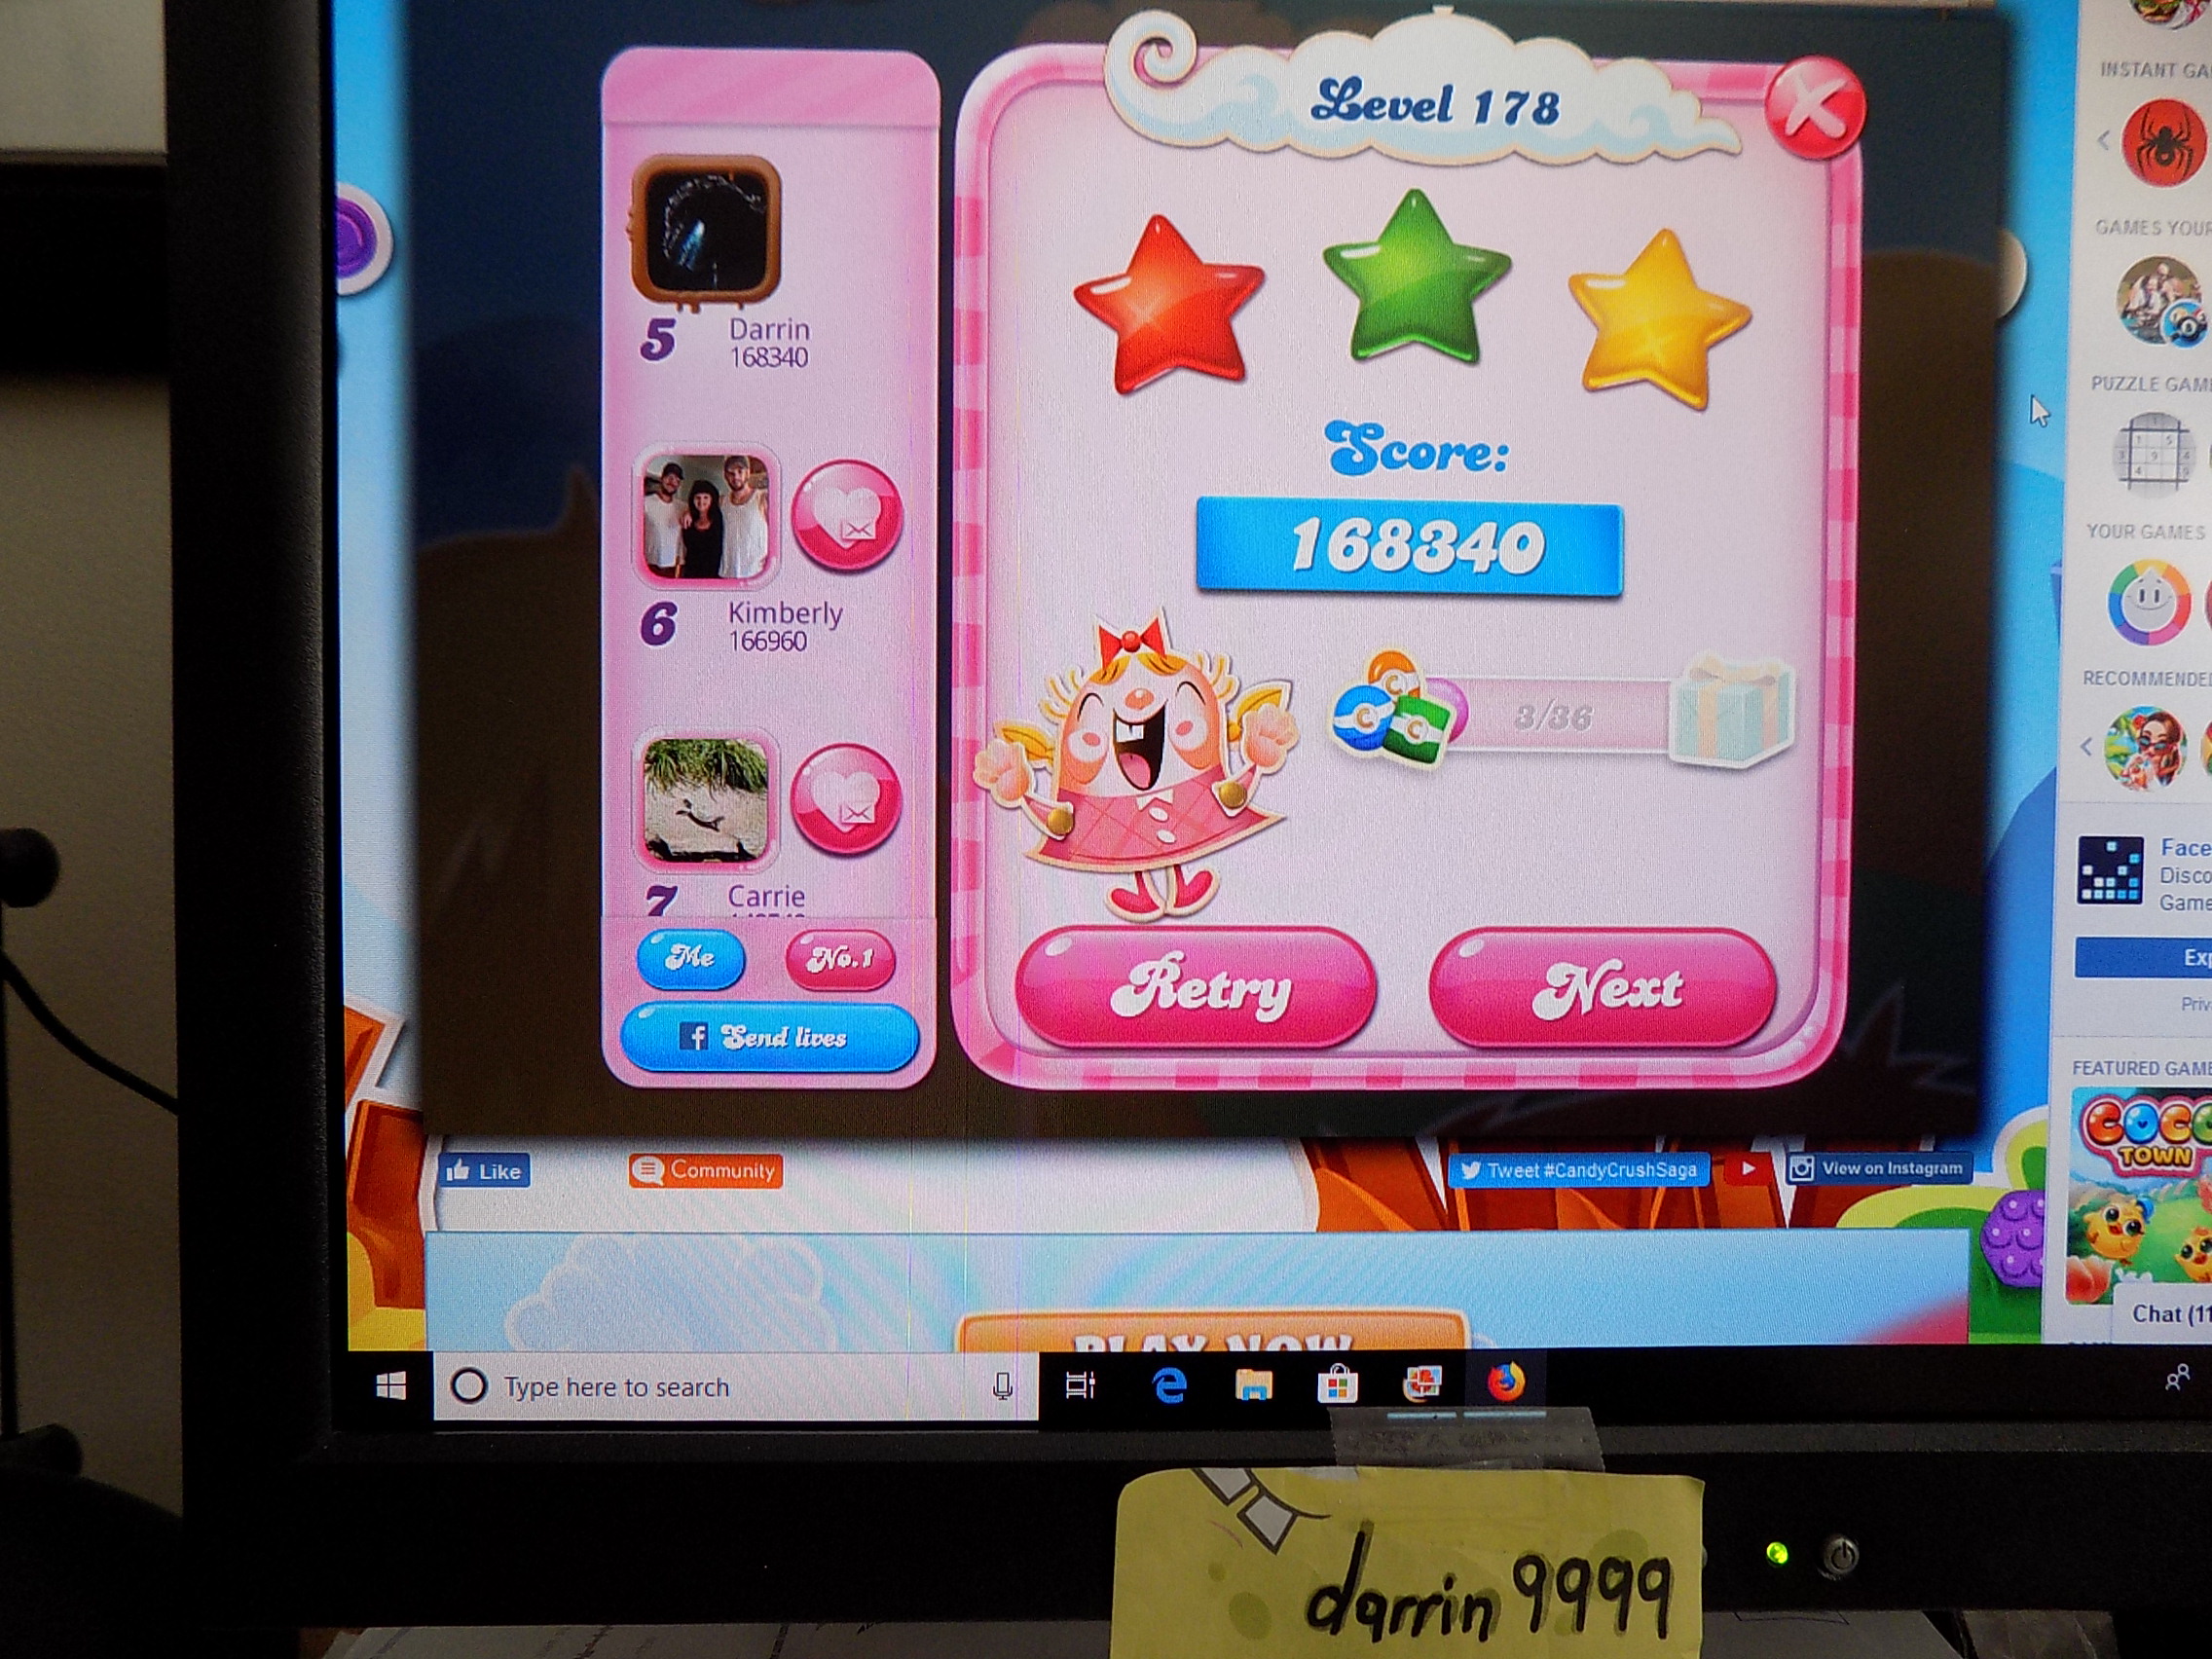 Candy Crush Saga: Level 178 168,340 points